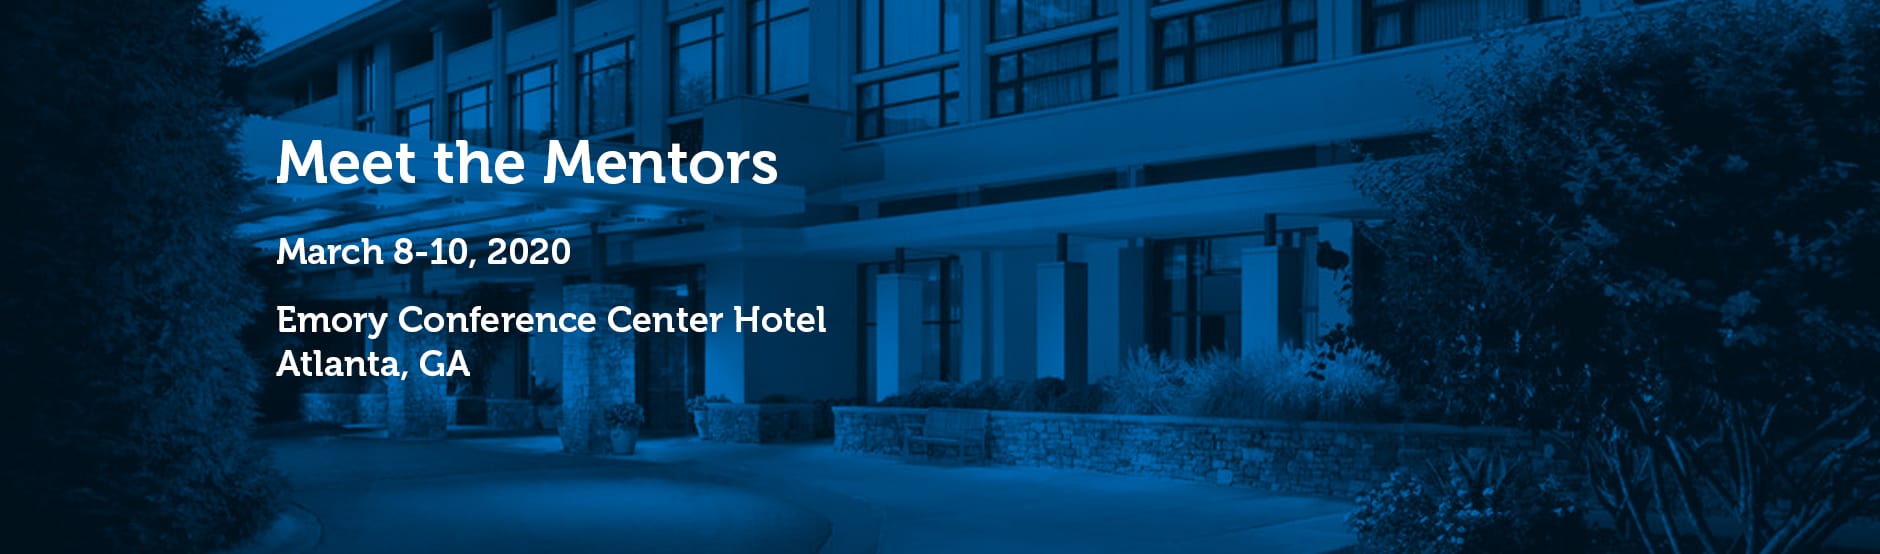 NFDA's Meet The Mentors March 8-10, 2020 at the Emory Conference Center Hotel, Atlanta, GA